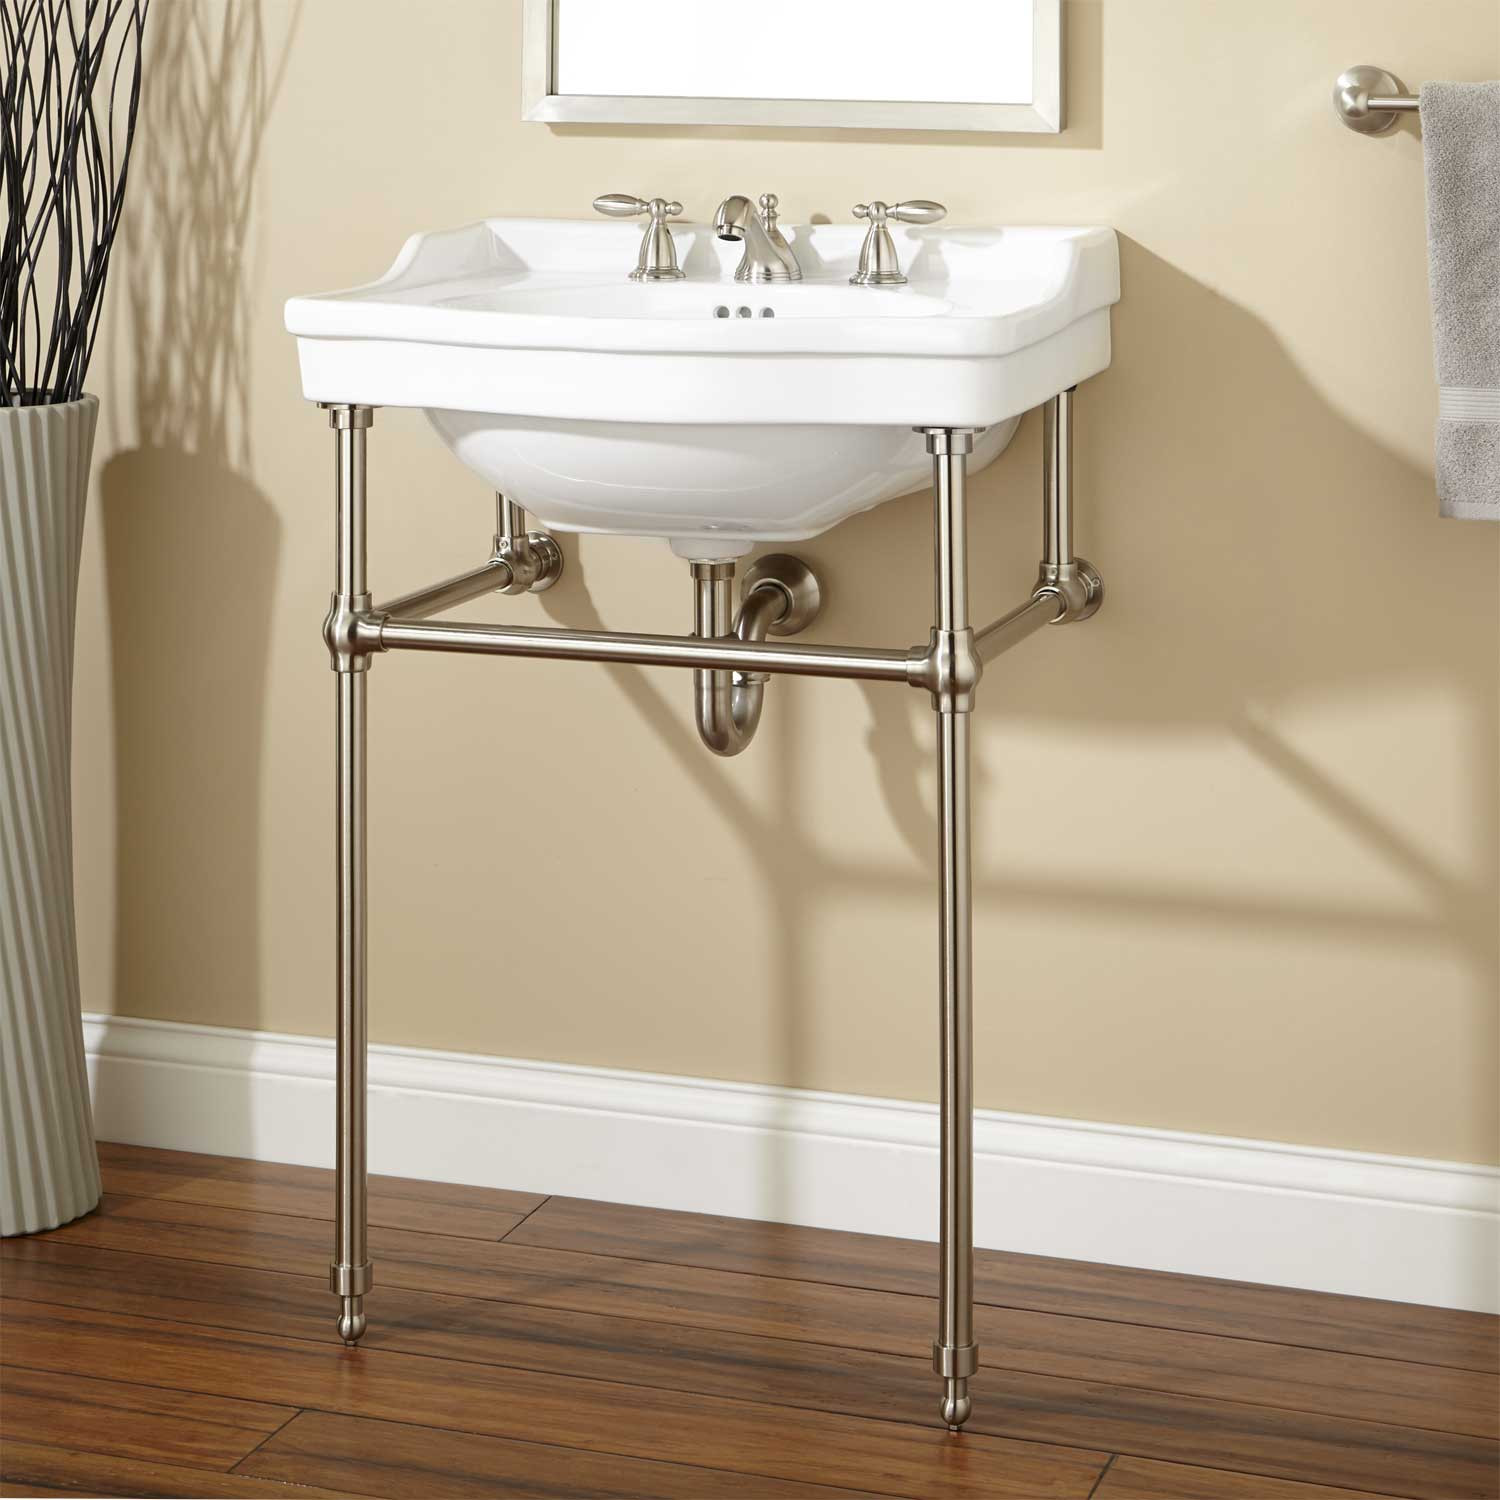 Console Sink Bathroom
 Cierra Console Sink with Brass Stand Bathroom